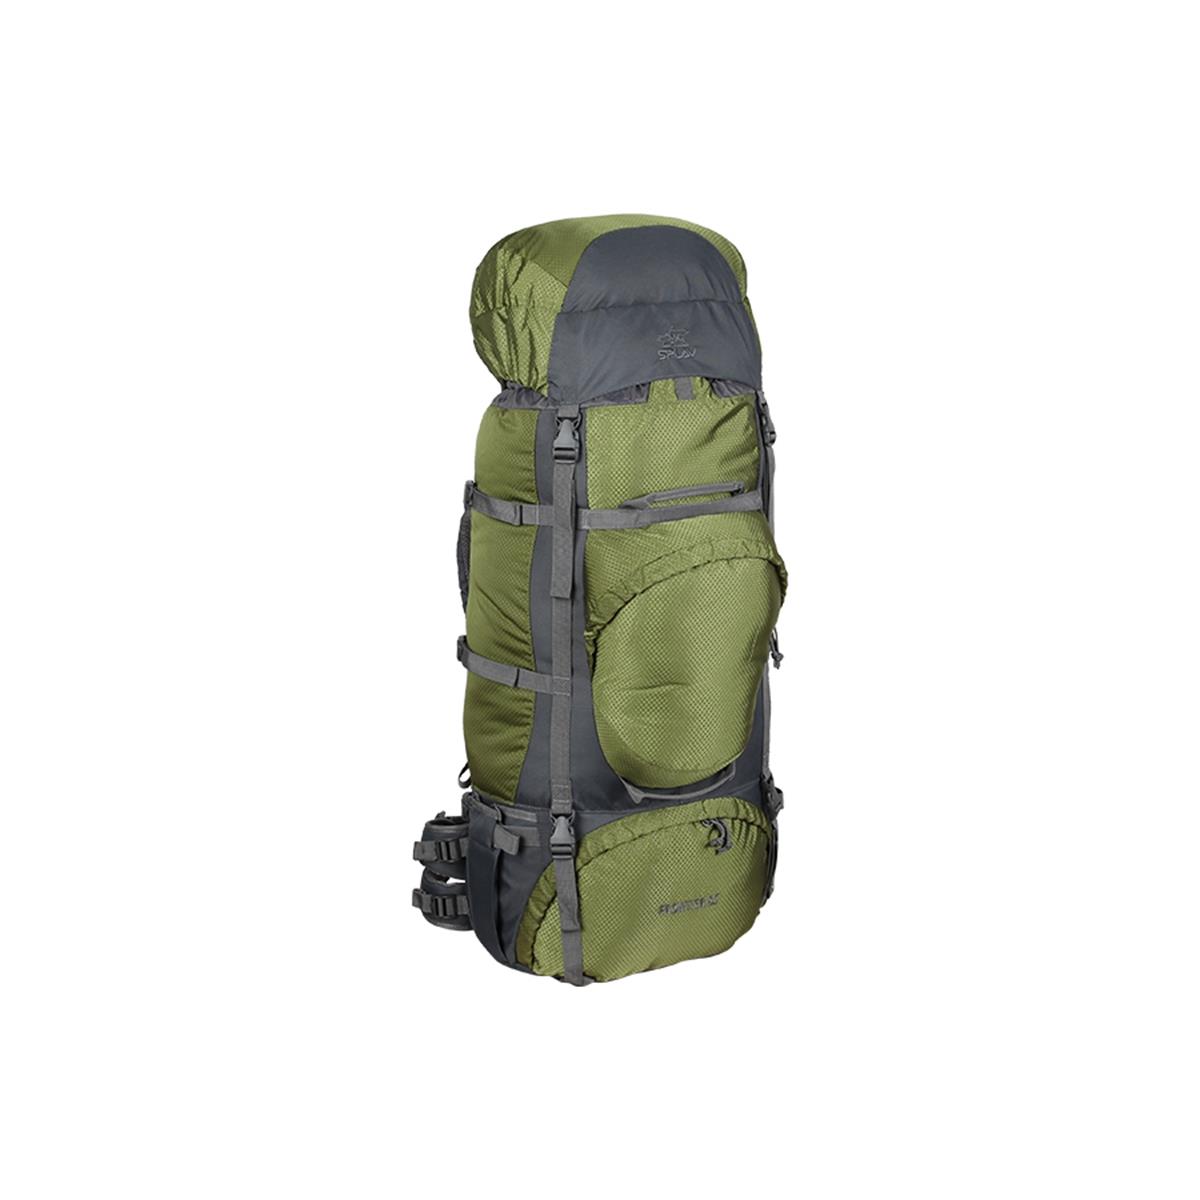 Рюкзак Frontier 85 СПЛАВ сумка мессенджер на клапане наружный карман пудра